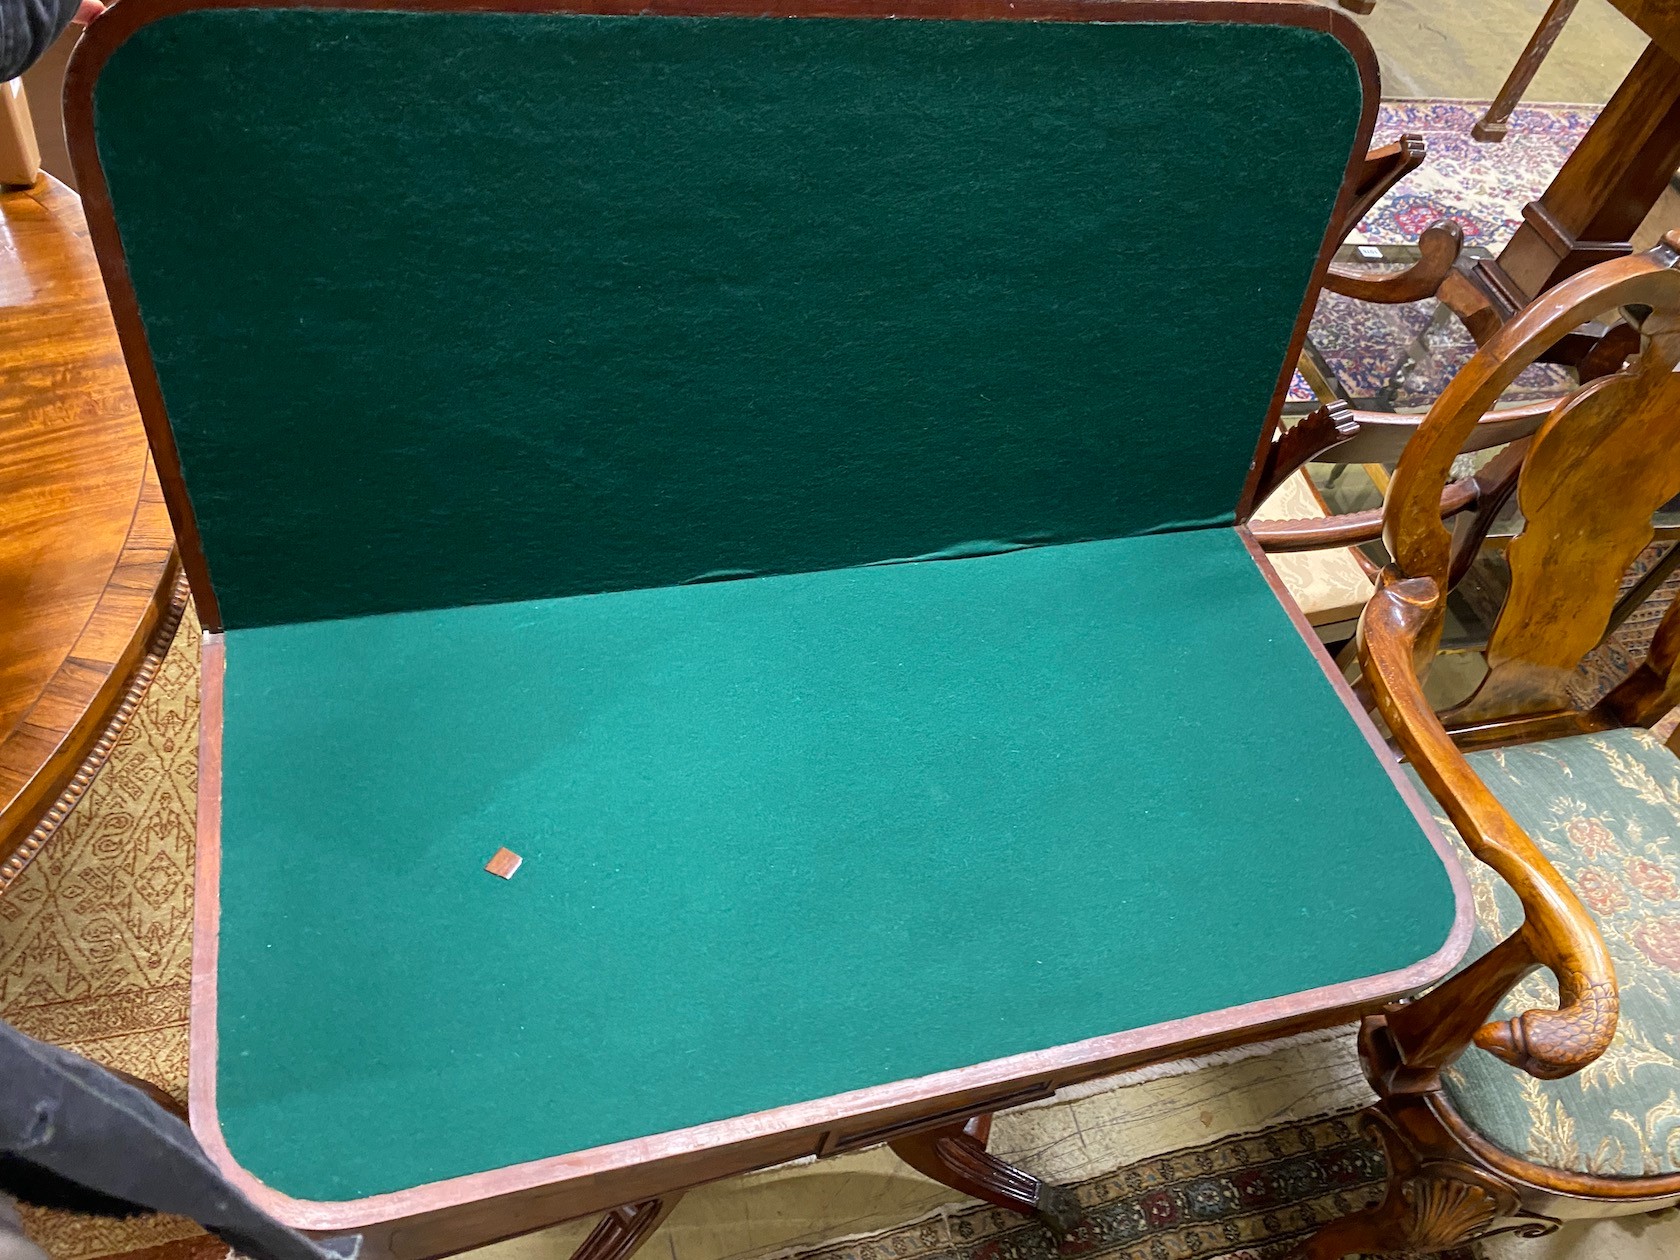 A Regency banded mahogany folding card table, width 90cm, depth 45cm, height 73cm